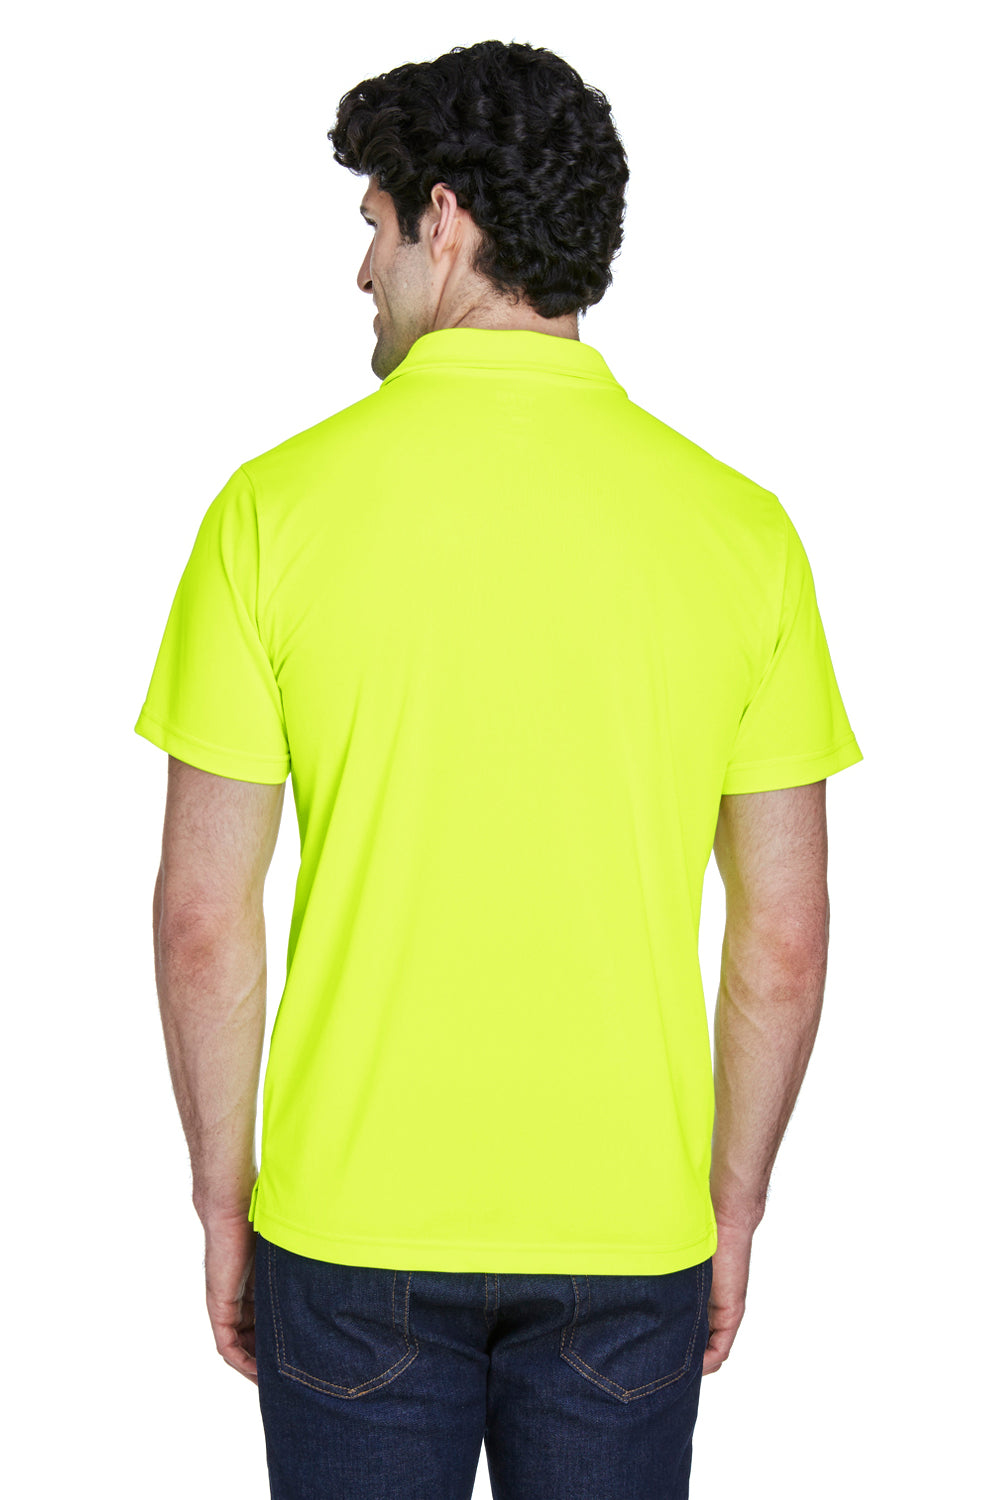 Team 365 TT21 Mens Command Performance Moisture Wicking Short Sleeve Polo Shirt Safety Yellow Back